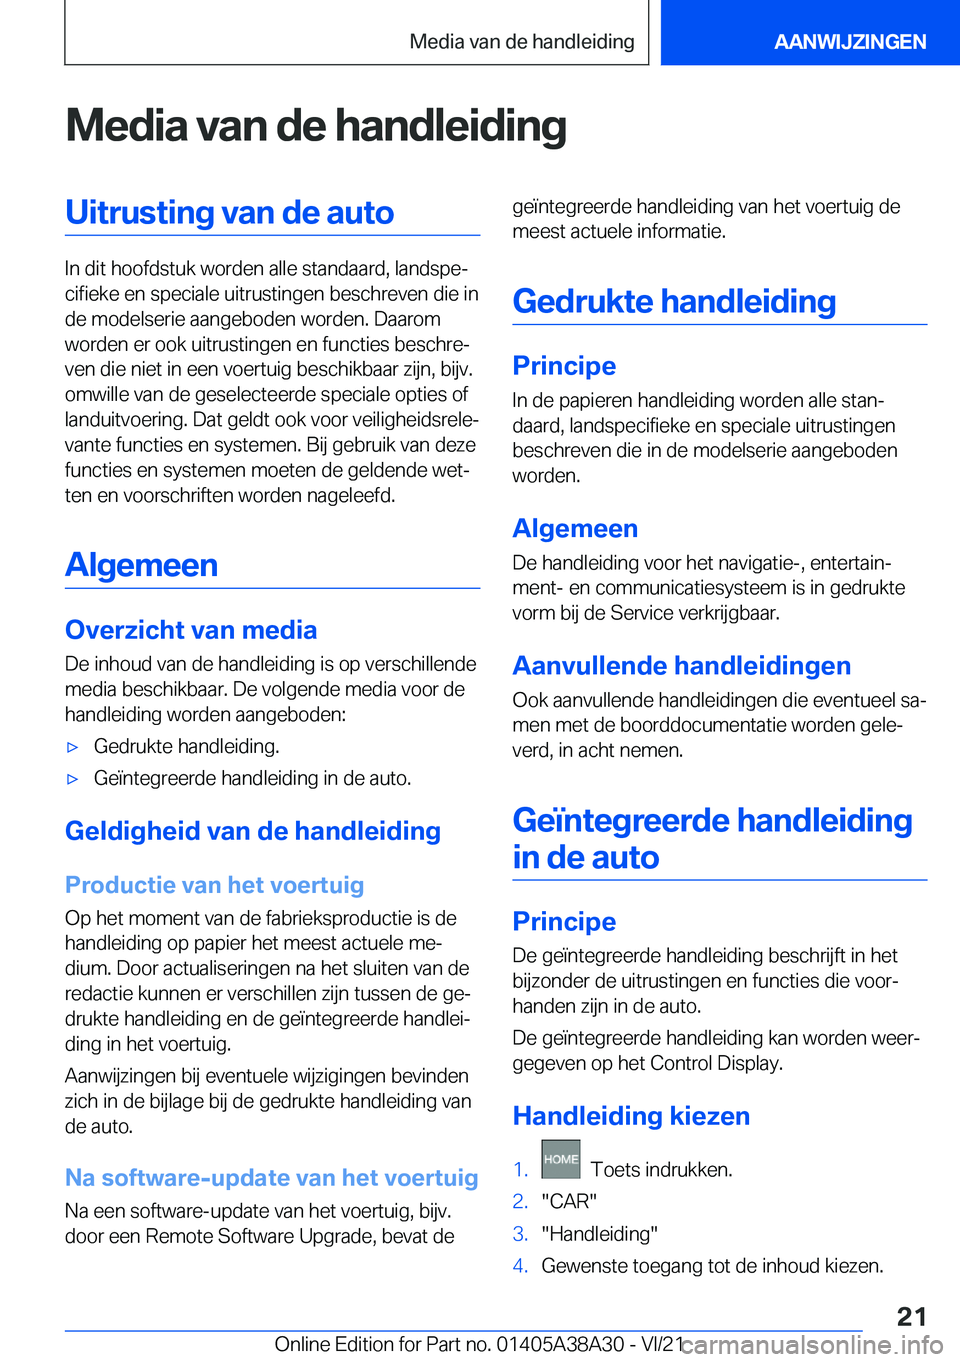 BMW 4 SERIES GRAN COUPE 2022  Instructieboekjes (in Dutch) �M�e�d�i�a��v�a�n��d�e��h�a�n�d�l�e�i�d�i�n�g�U�i�t�r�u�s�t�i�n�g��v�a�n��d�e��a�u�t�o
�I�n��d�i�t��h�o�o�f�d�s�t�u�k��w�o�r�d�e�n��a�l�l�e��s�t�a�n�d�a�a�r�d�,��l�a�n�d�s�p�ej�c�i�f�i�e�